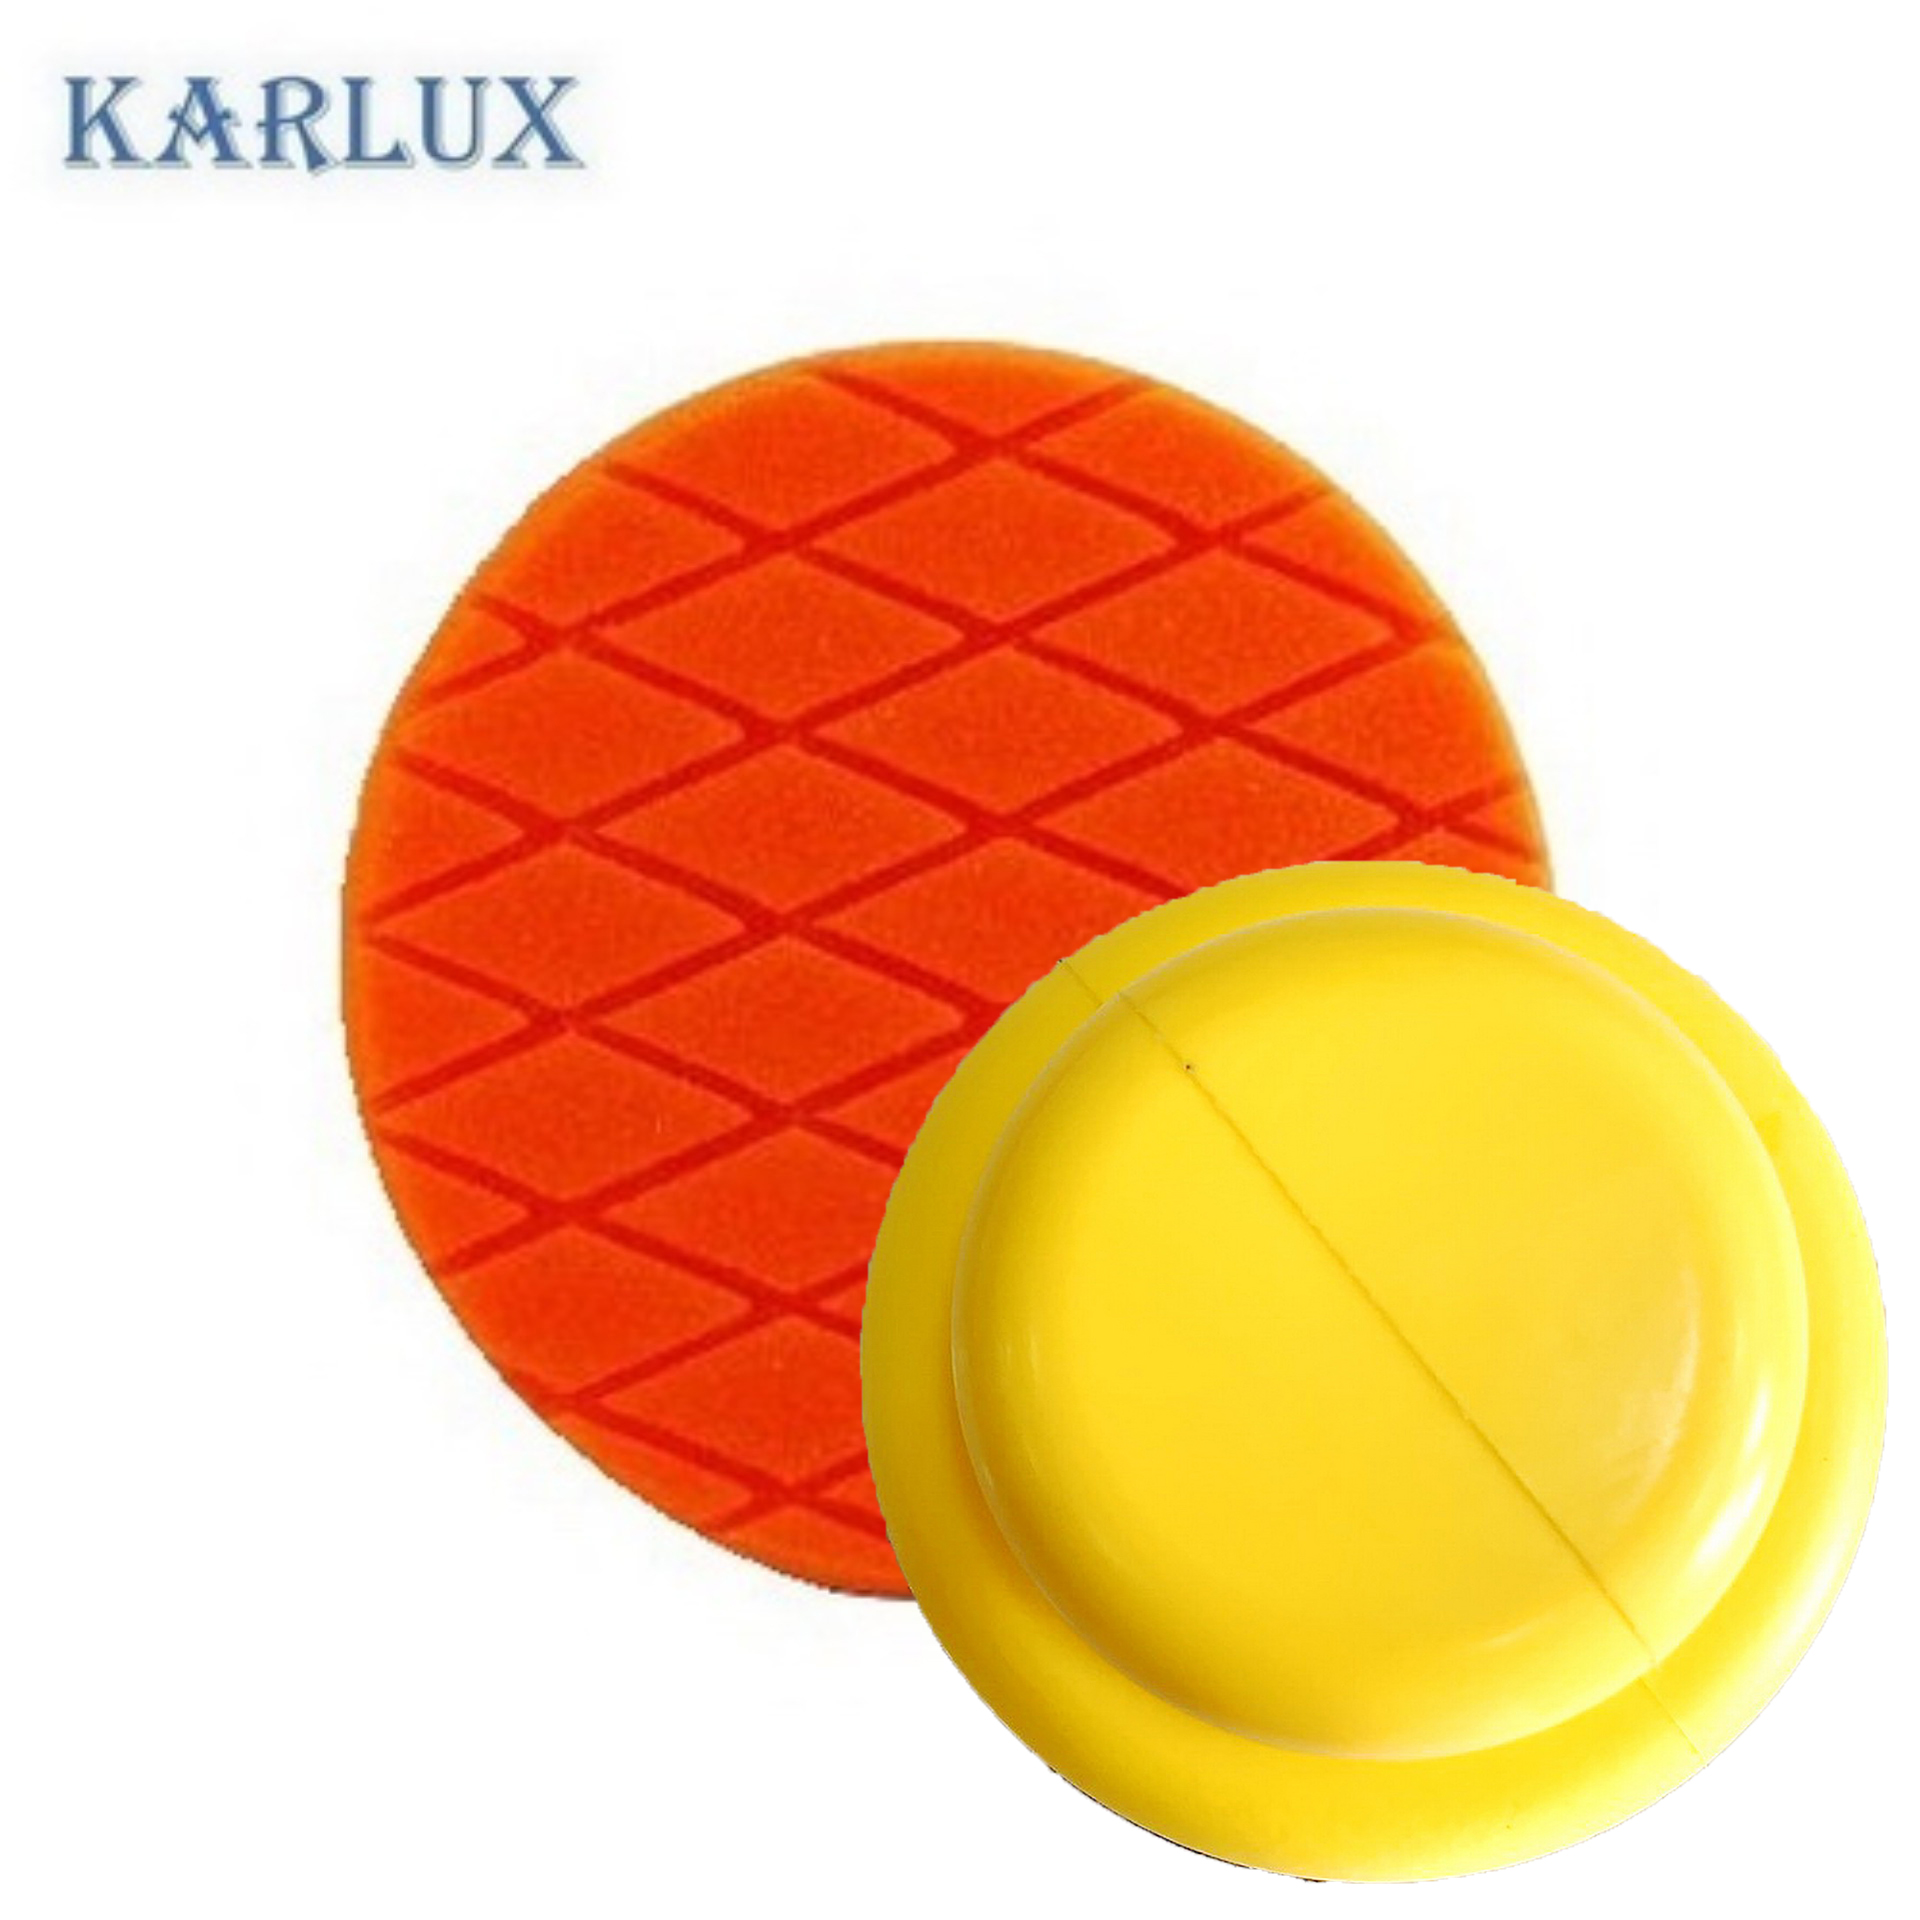 Karlux แป้นมือจับ ฟองน้ำขัดสีรถ 6นิ้ว สีส้ม Orange Diamond Cross Cutting/Buffing Foam 6inch (สำหรับแป้นจับ 5นิ้ว เพื่อเว้นขอบ)